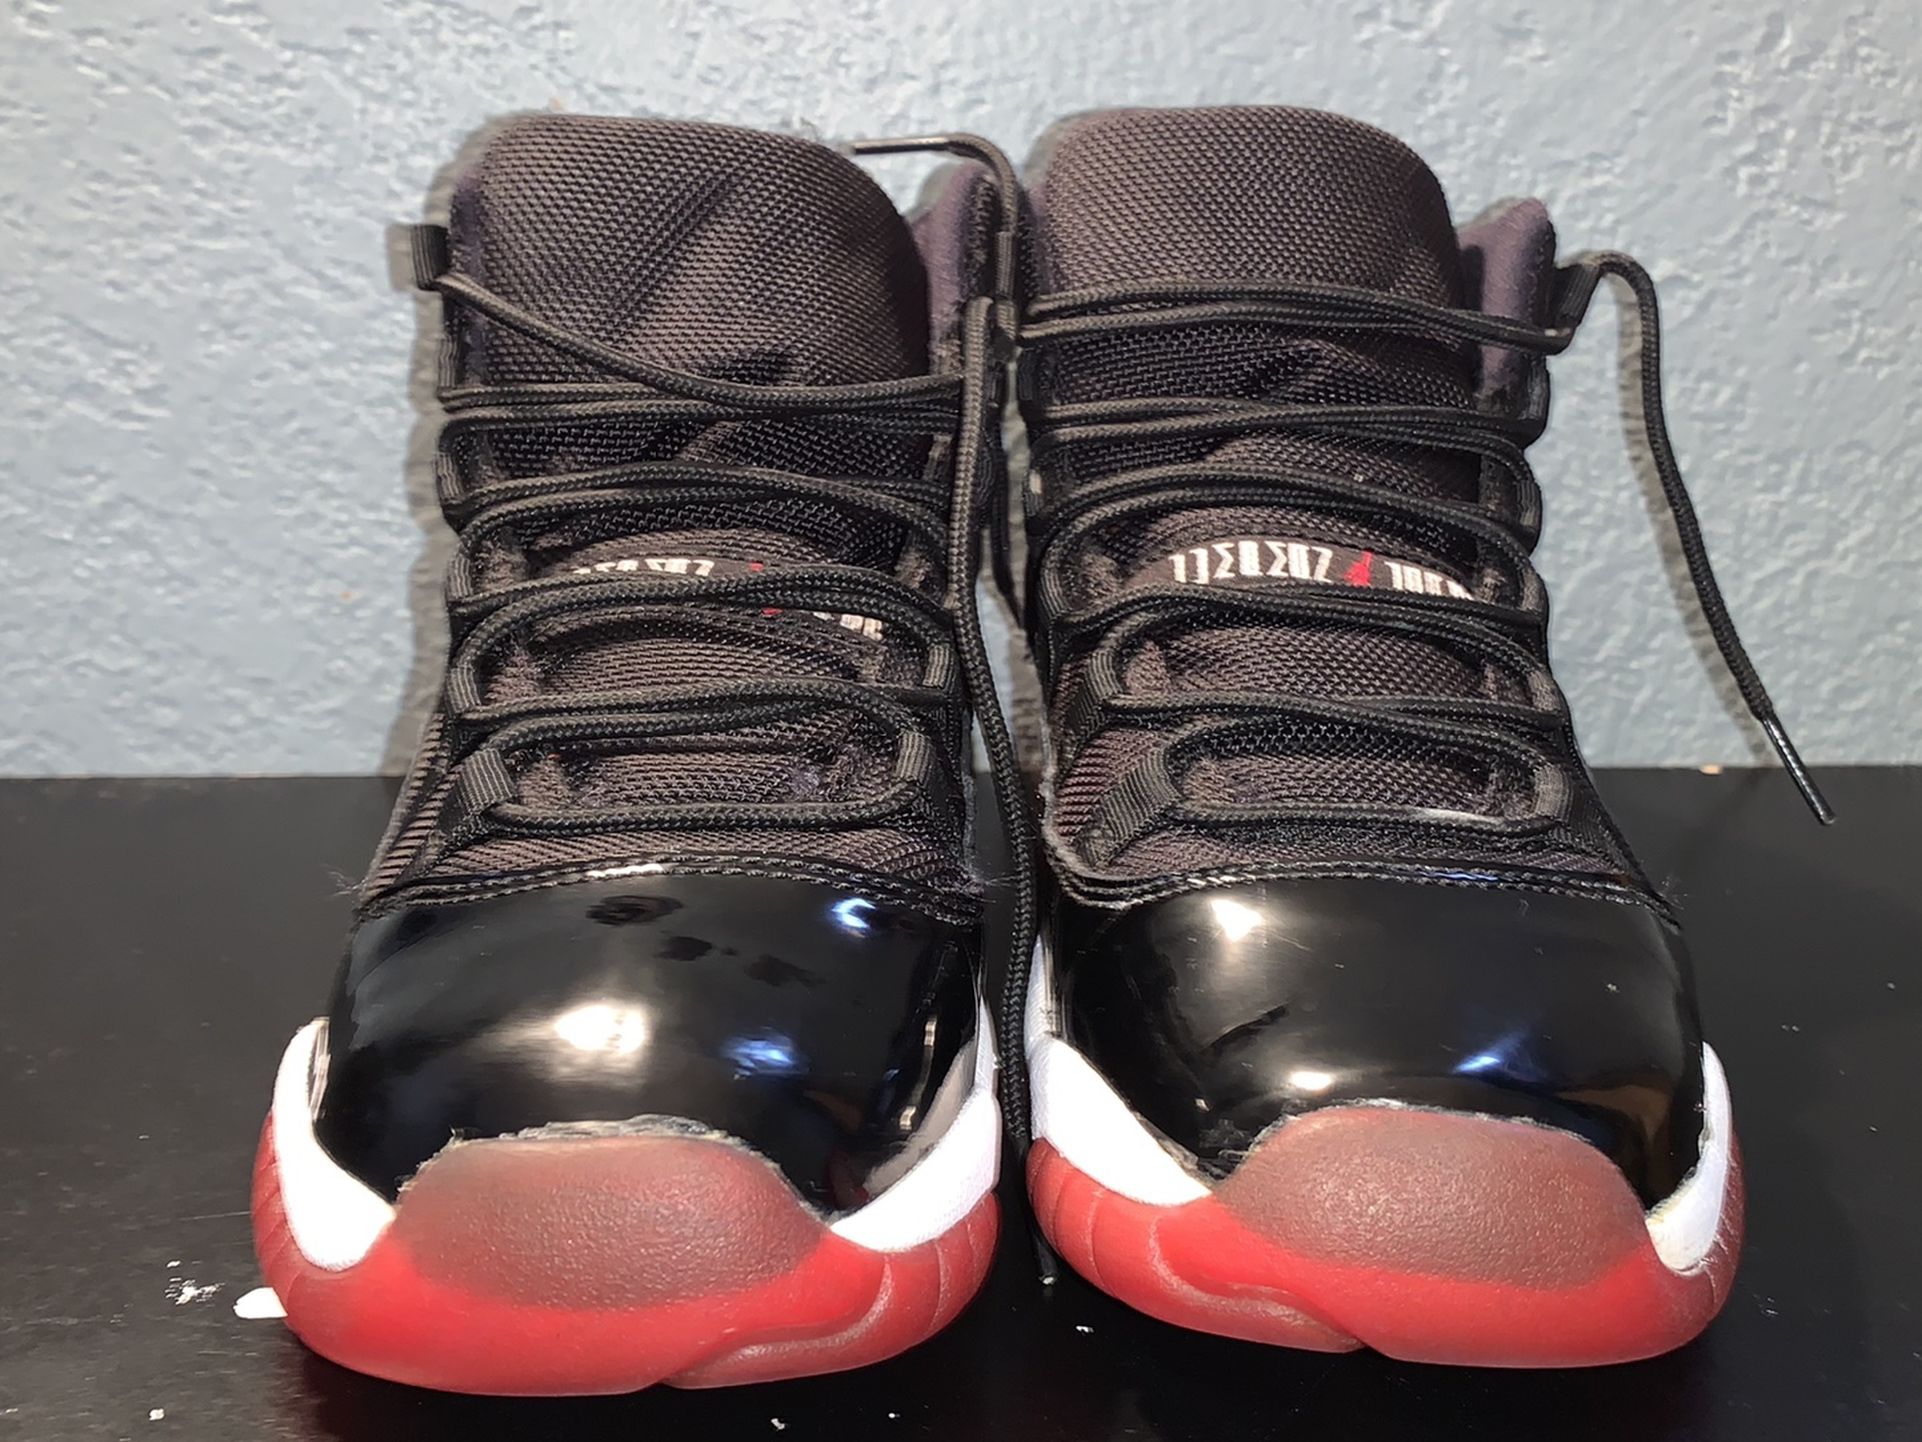 Jordan 11 Retro “bred” 2012 release